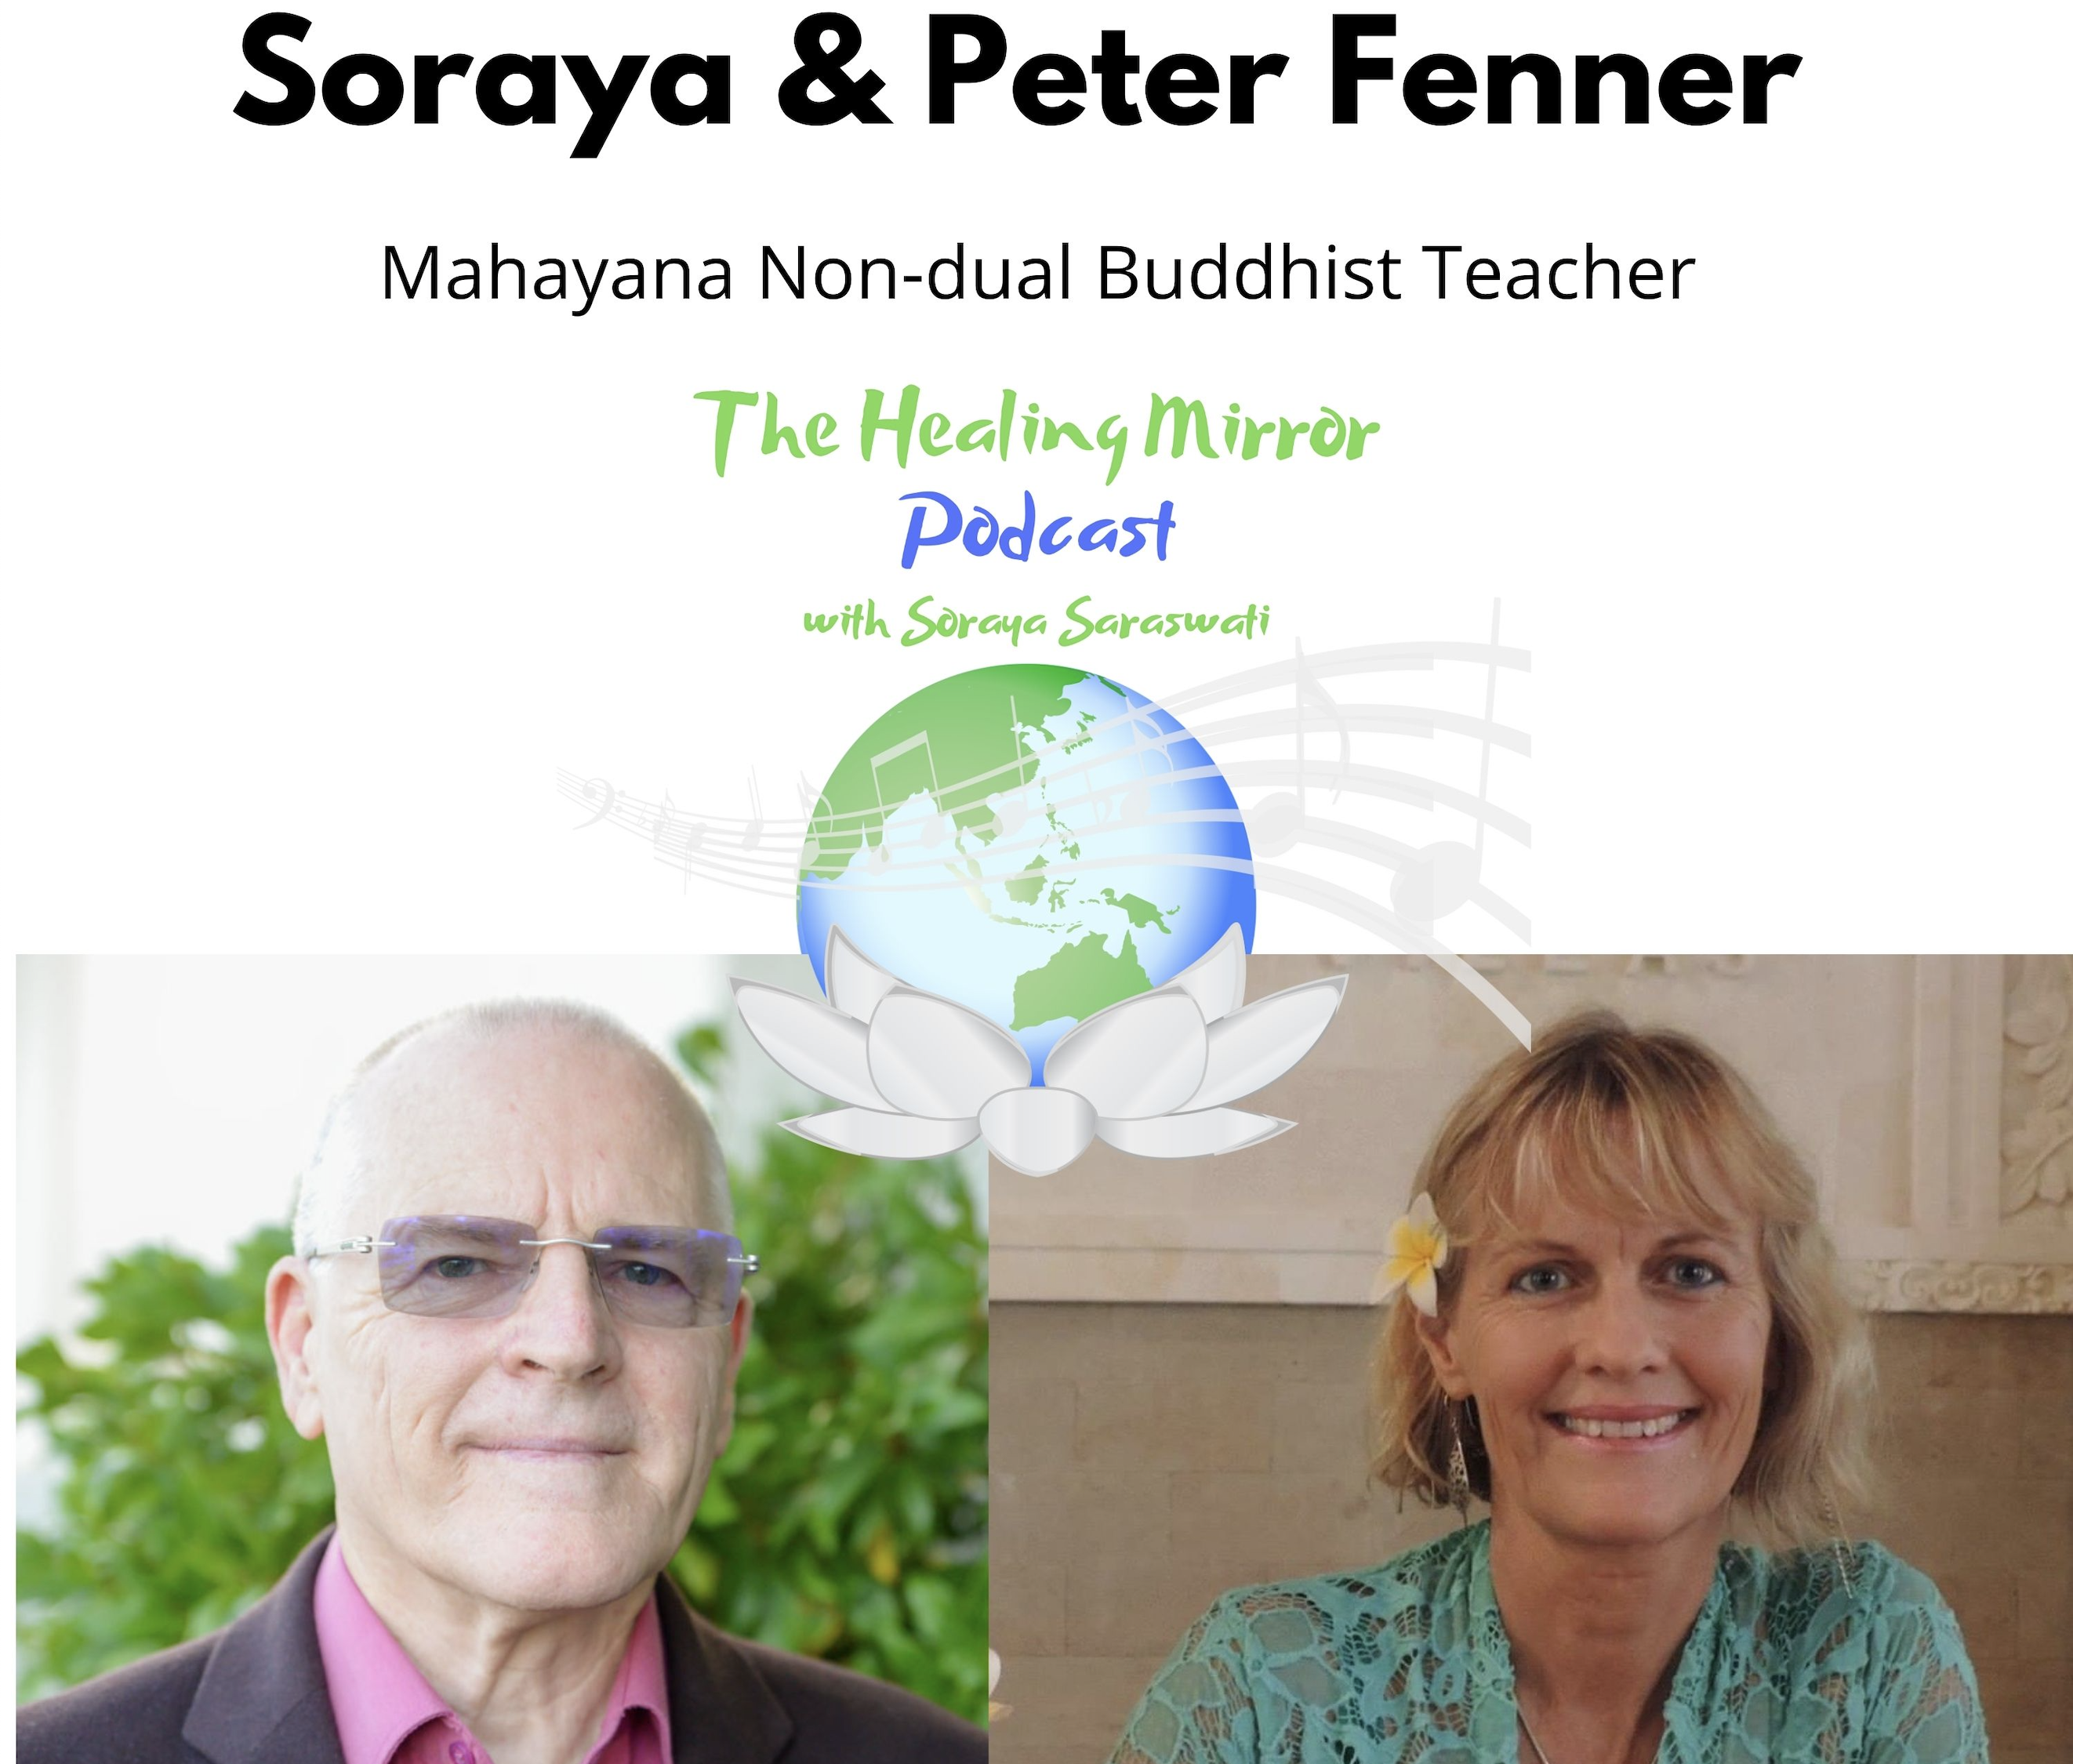 Peter Fenner: Mahayana Buddhist Non-dual Teacher